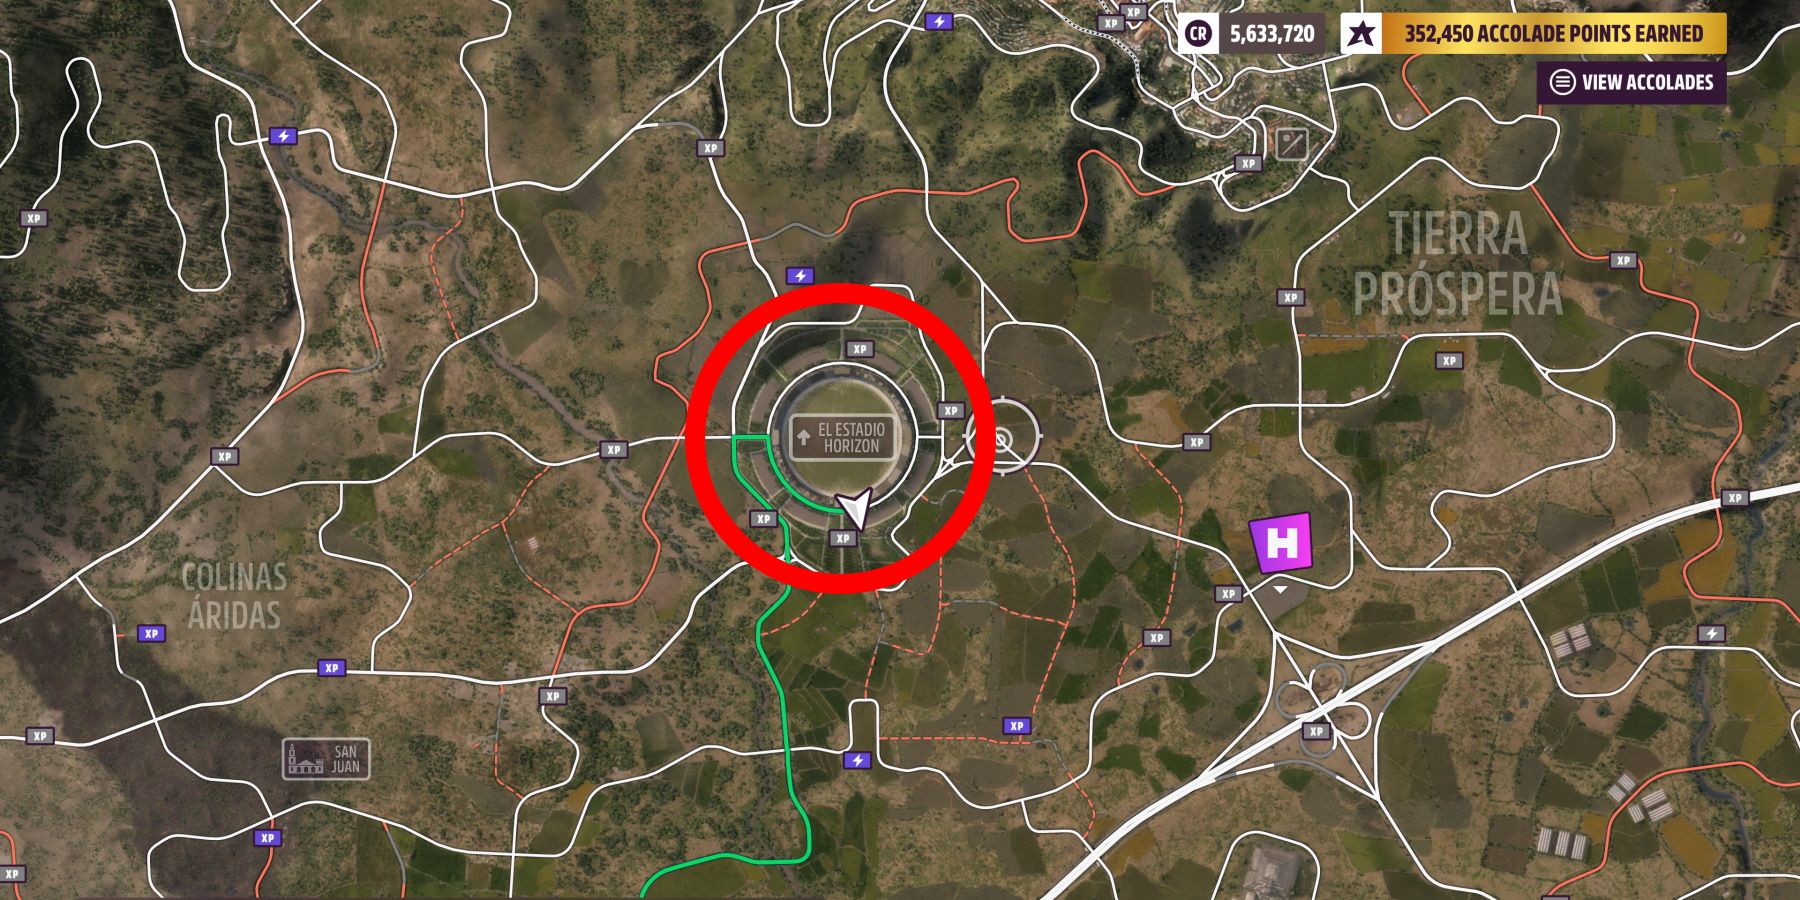 El Stadio Horizon location circled on Forza Horizon 5 map